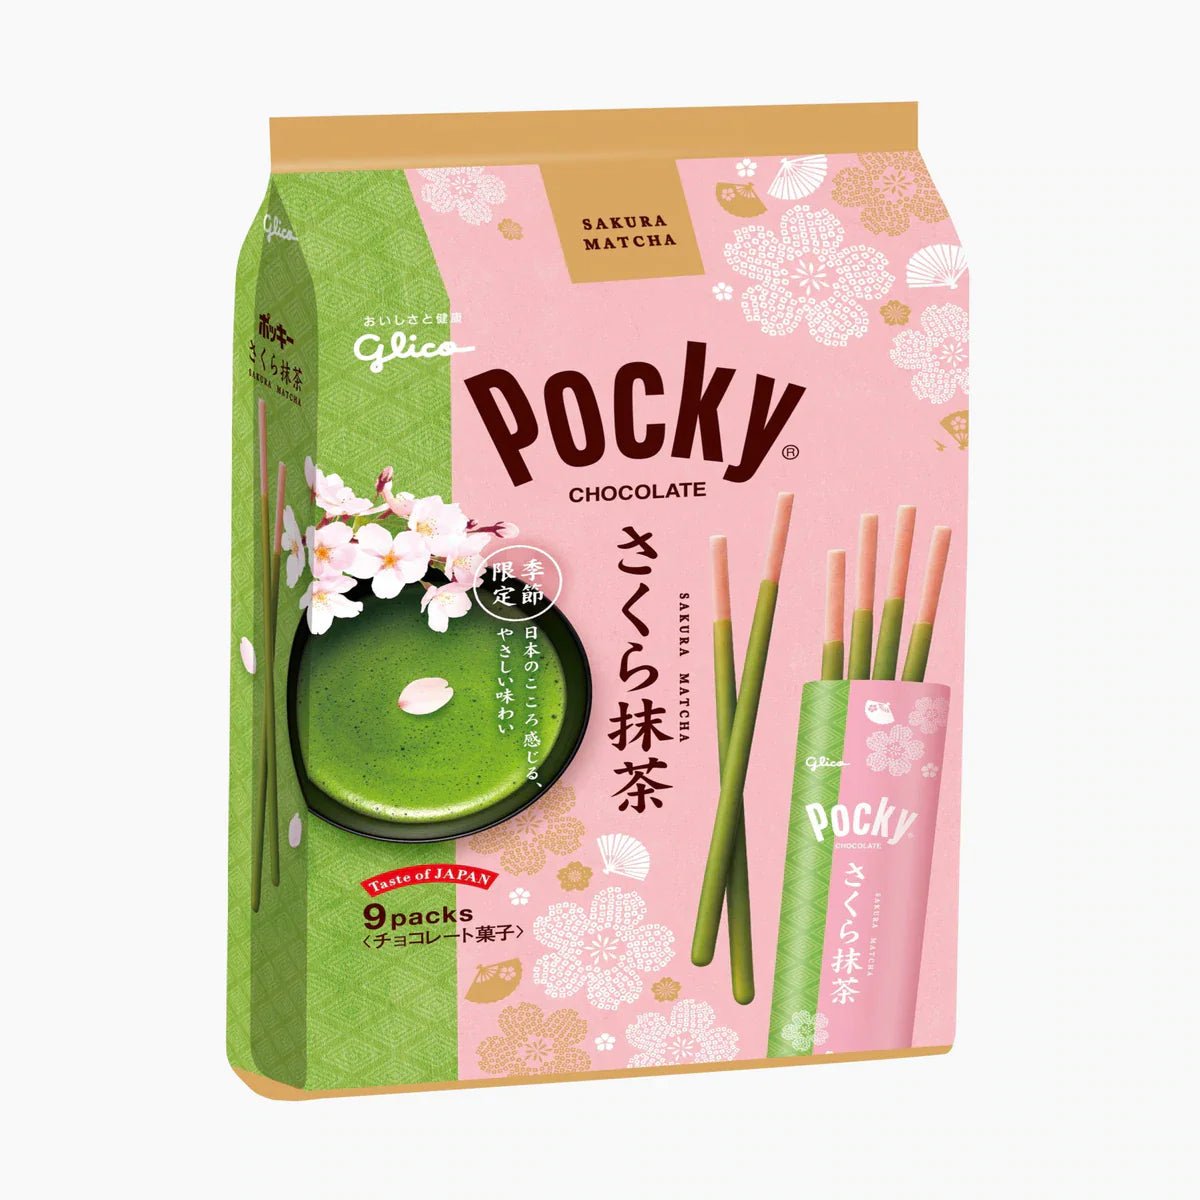 GLICO "Sakura Matcha" Special Edition Pocky - Rosey’s Kawaii Shop